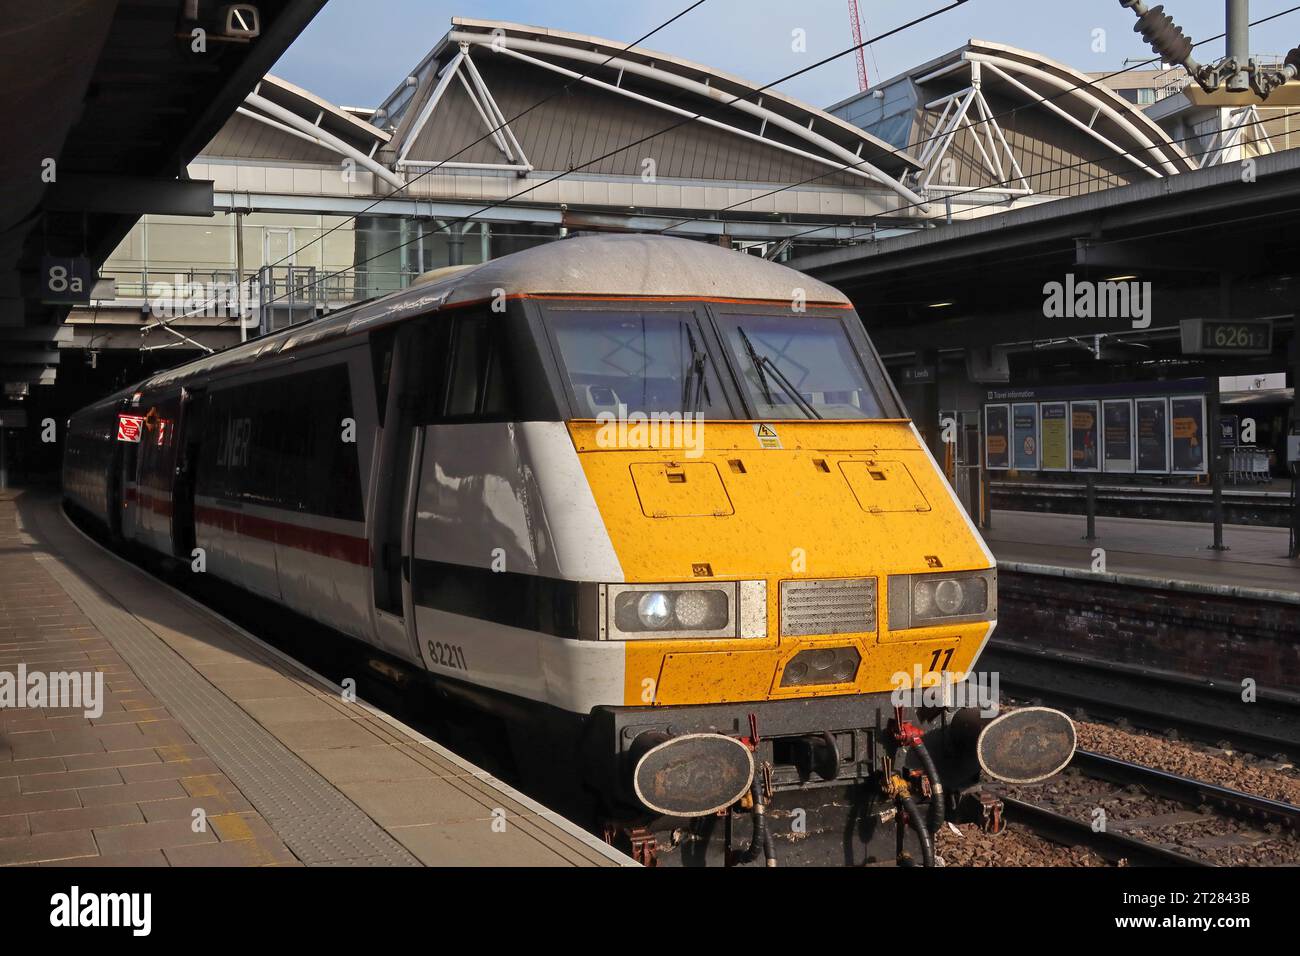 LNER 82211 Présentation train loco à New Station St, Leeds, Yorkshire, Angleterre, LS1 4DY Banque D'Images